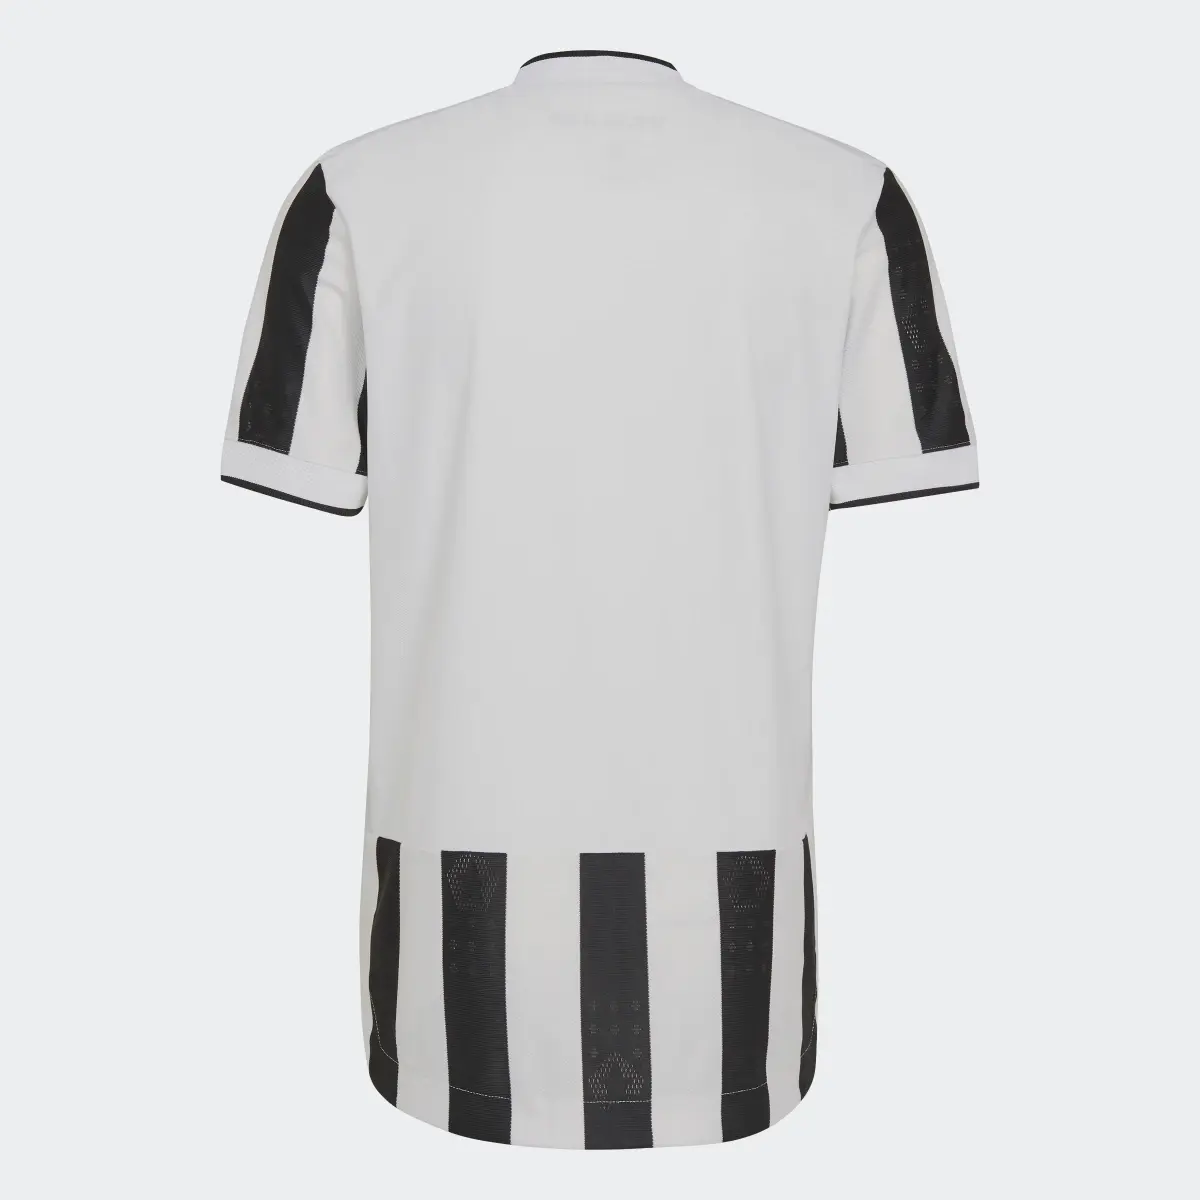 Adidas Camisola Principal Oficial 21/22 da Juventus. 2